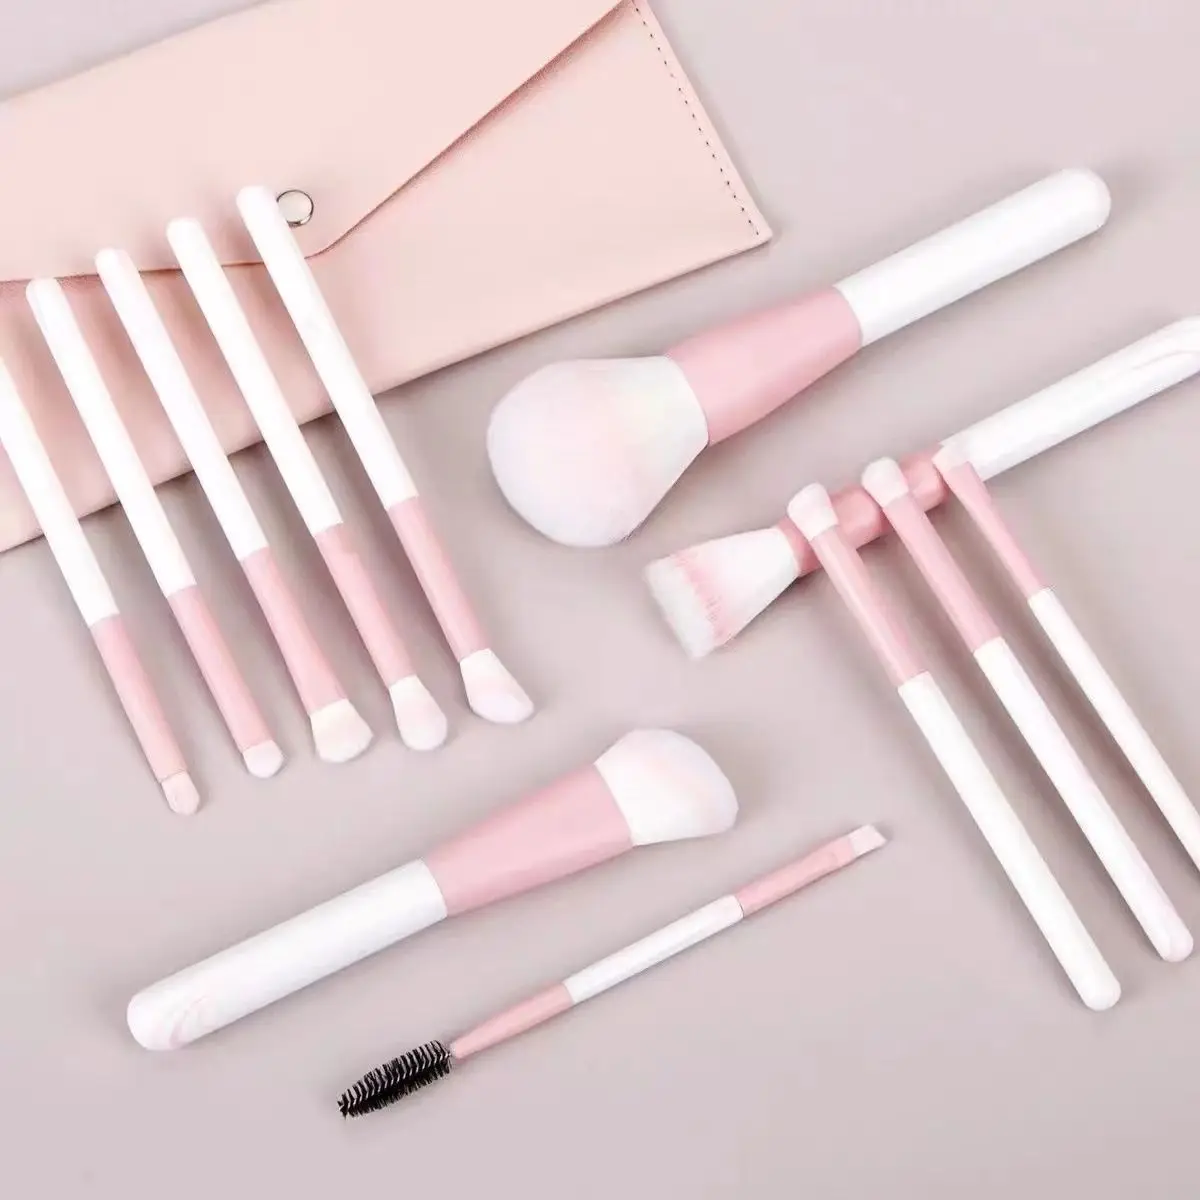 

HCS 12Pcs Sweet Pink Makeup Brushes Set for Cosmetic Soft Beauty Foundation Blush Powder Eyeshadow Concealer Blending Make Up